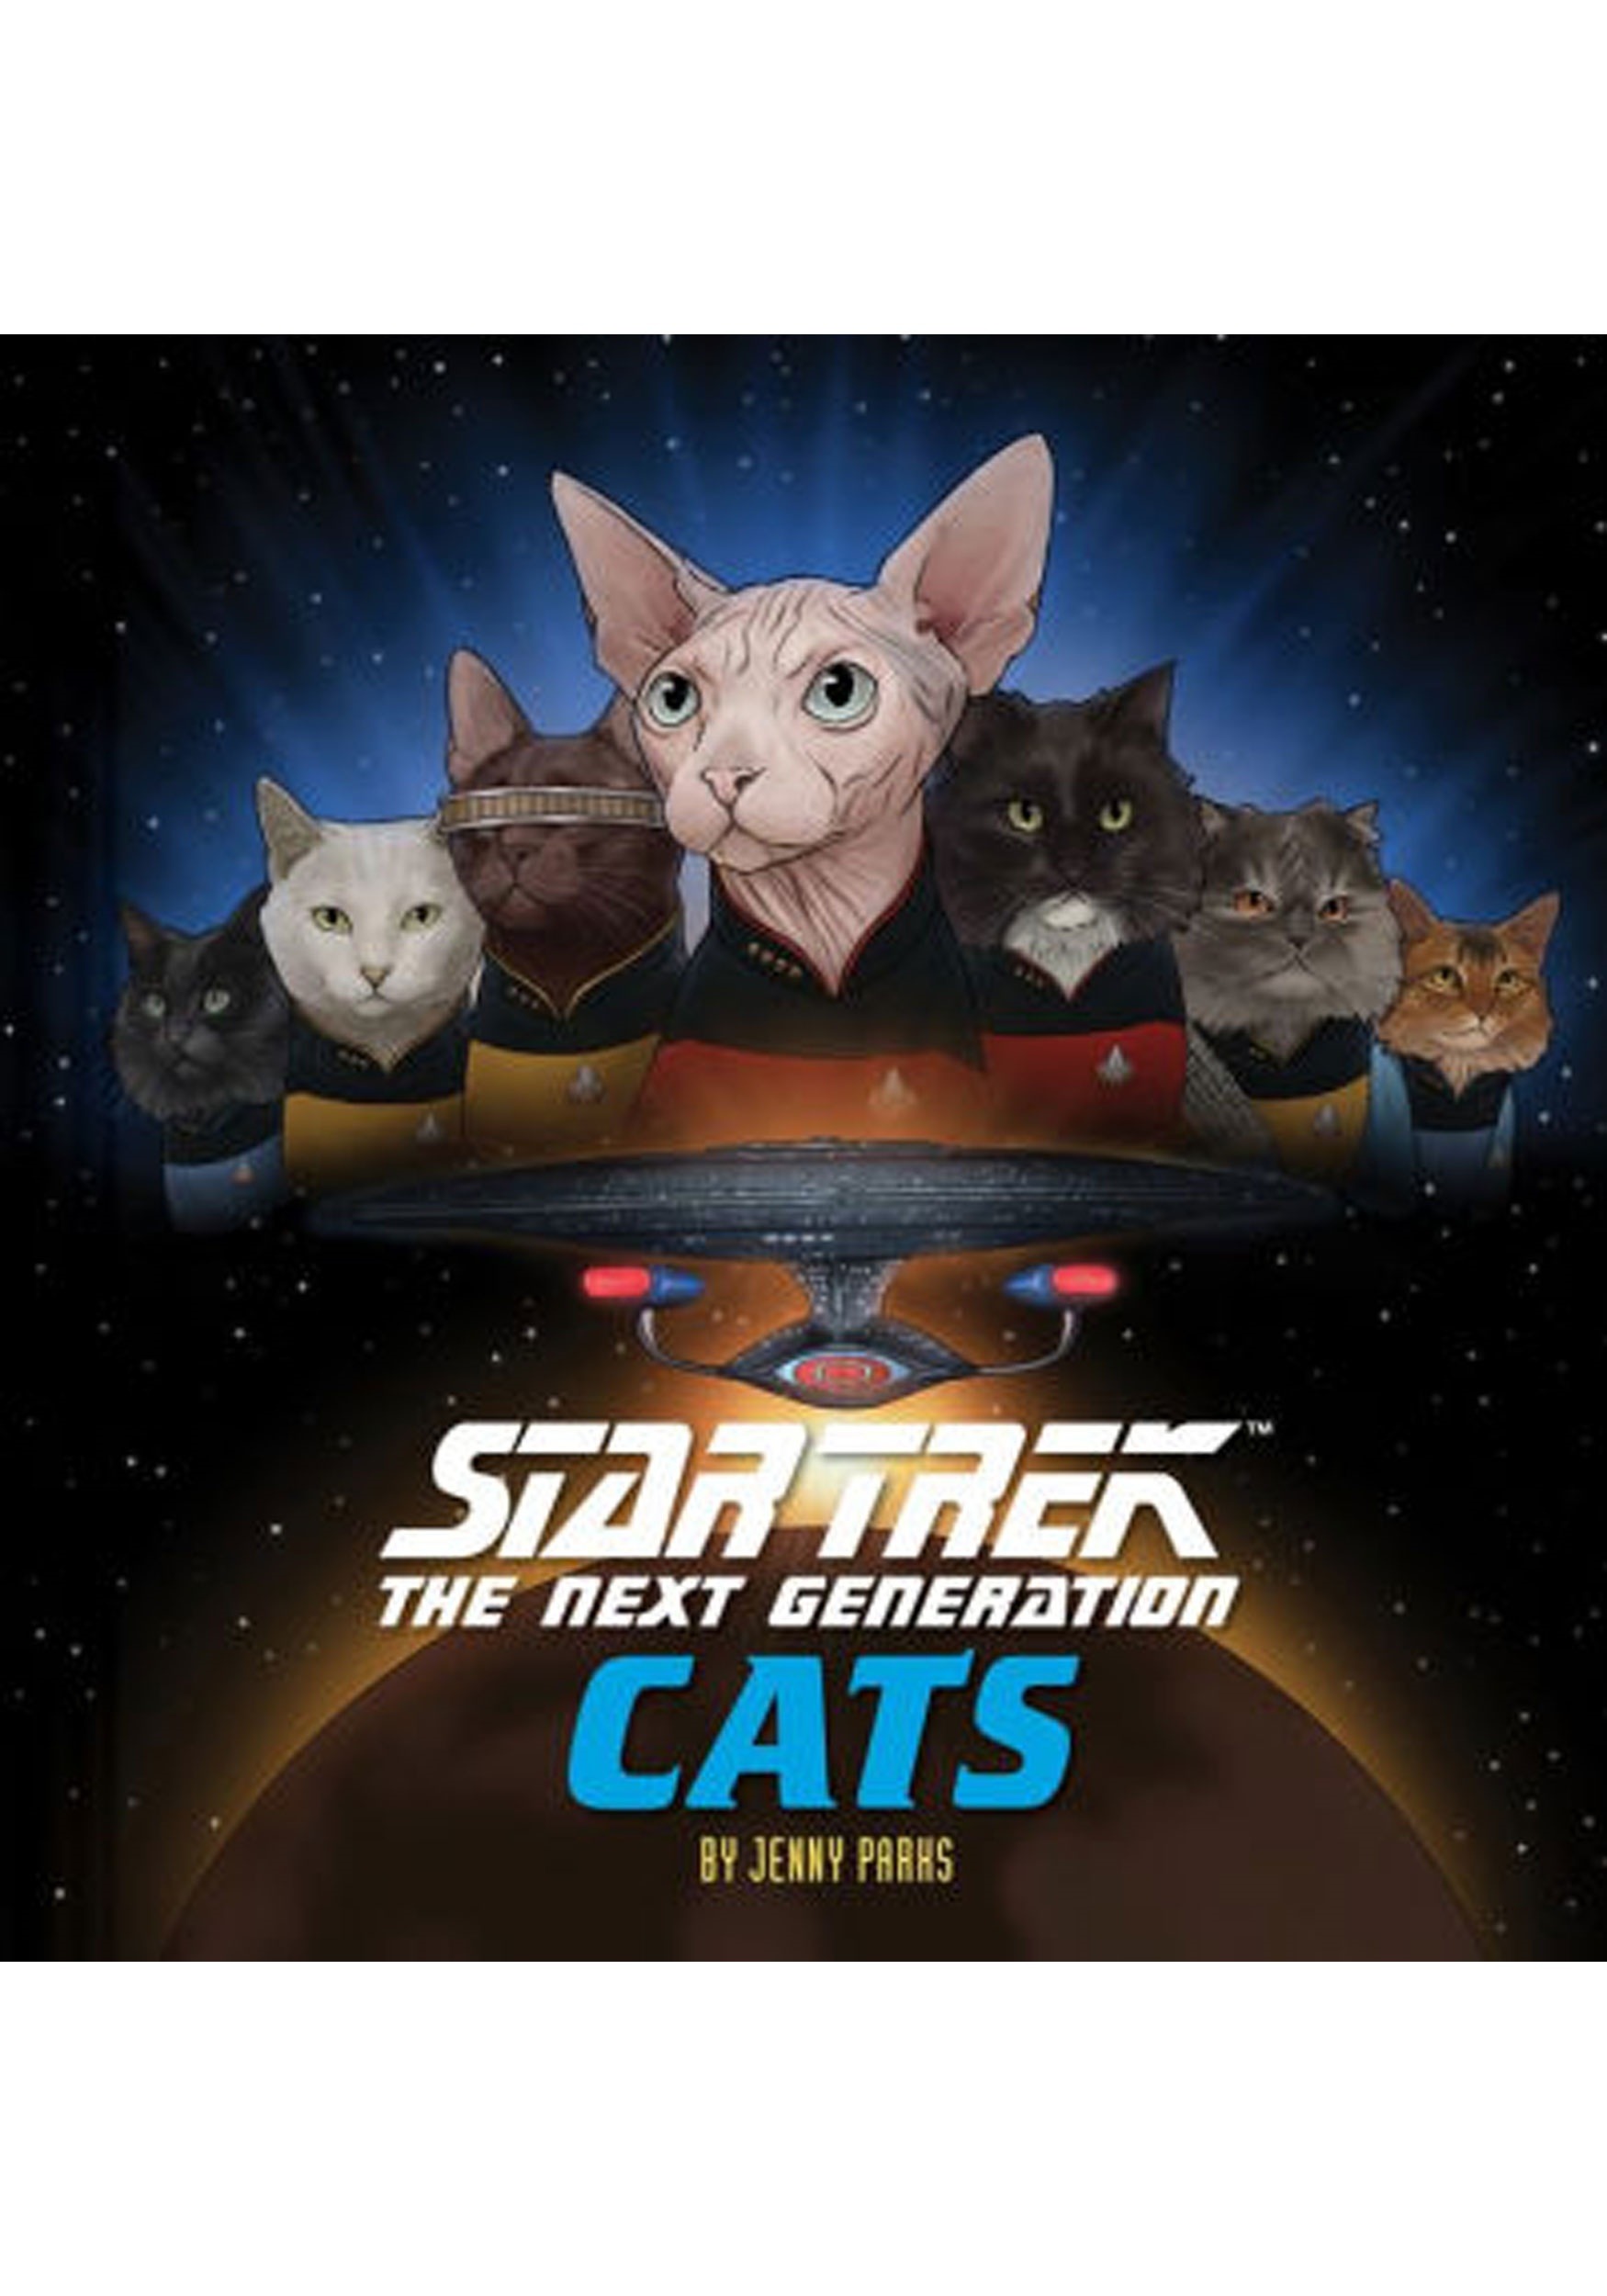 Star Trek: The Next Generation Cats Hardcover